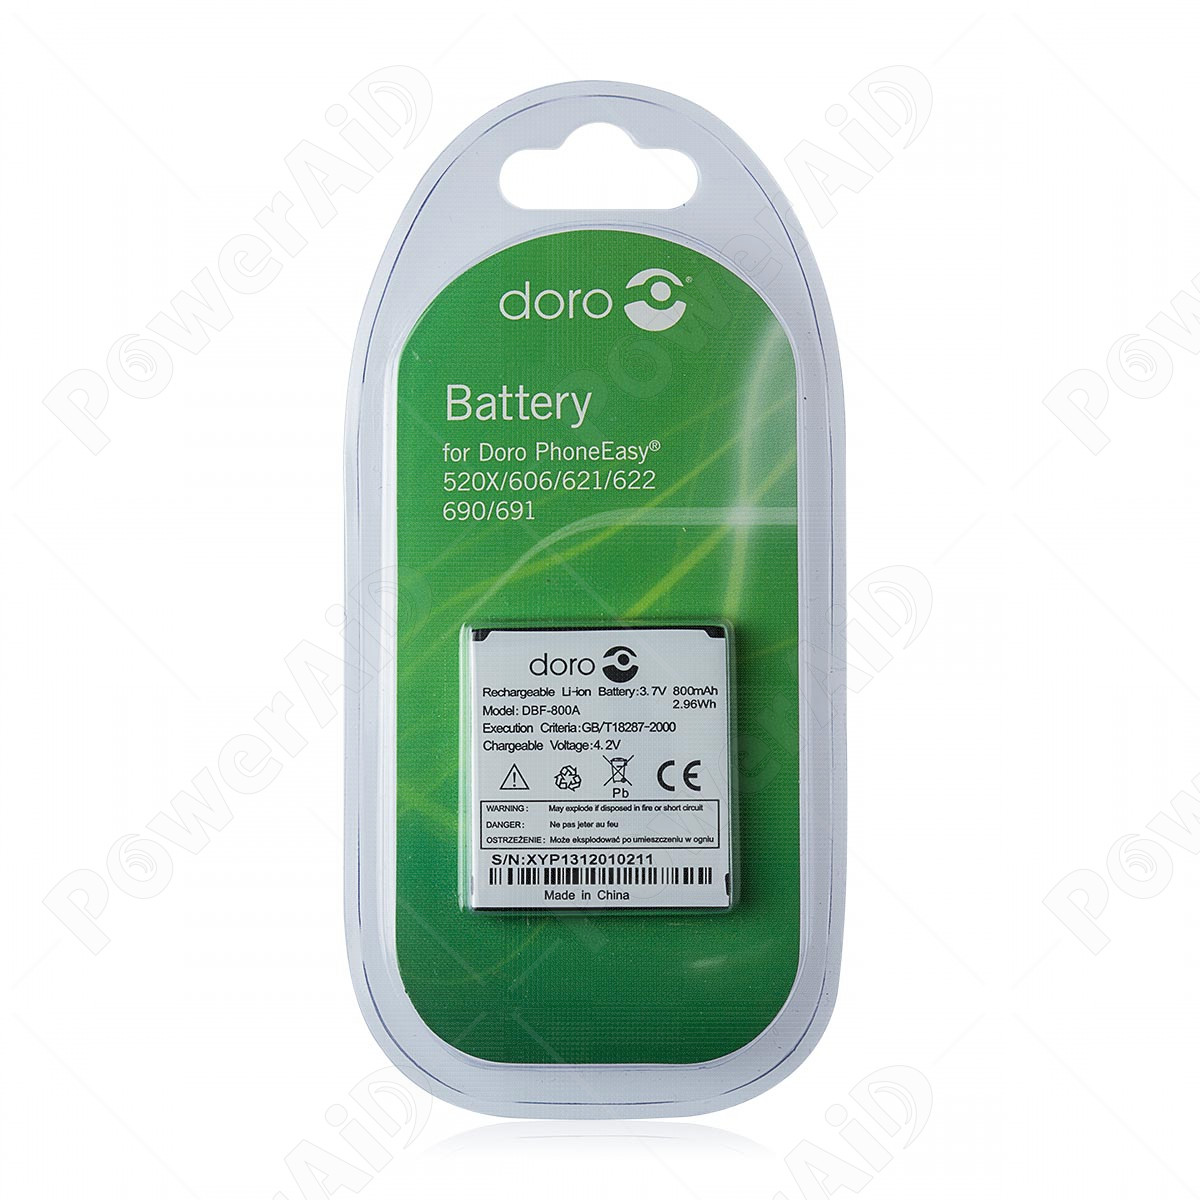 Doro - Batteria per PhoneEasy 520X / 606 / 621 / 622 / 690 / 691